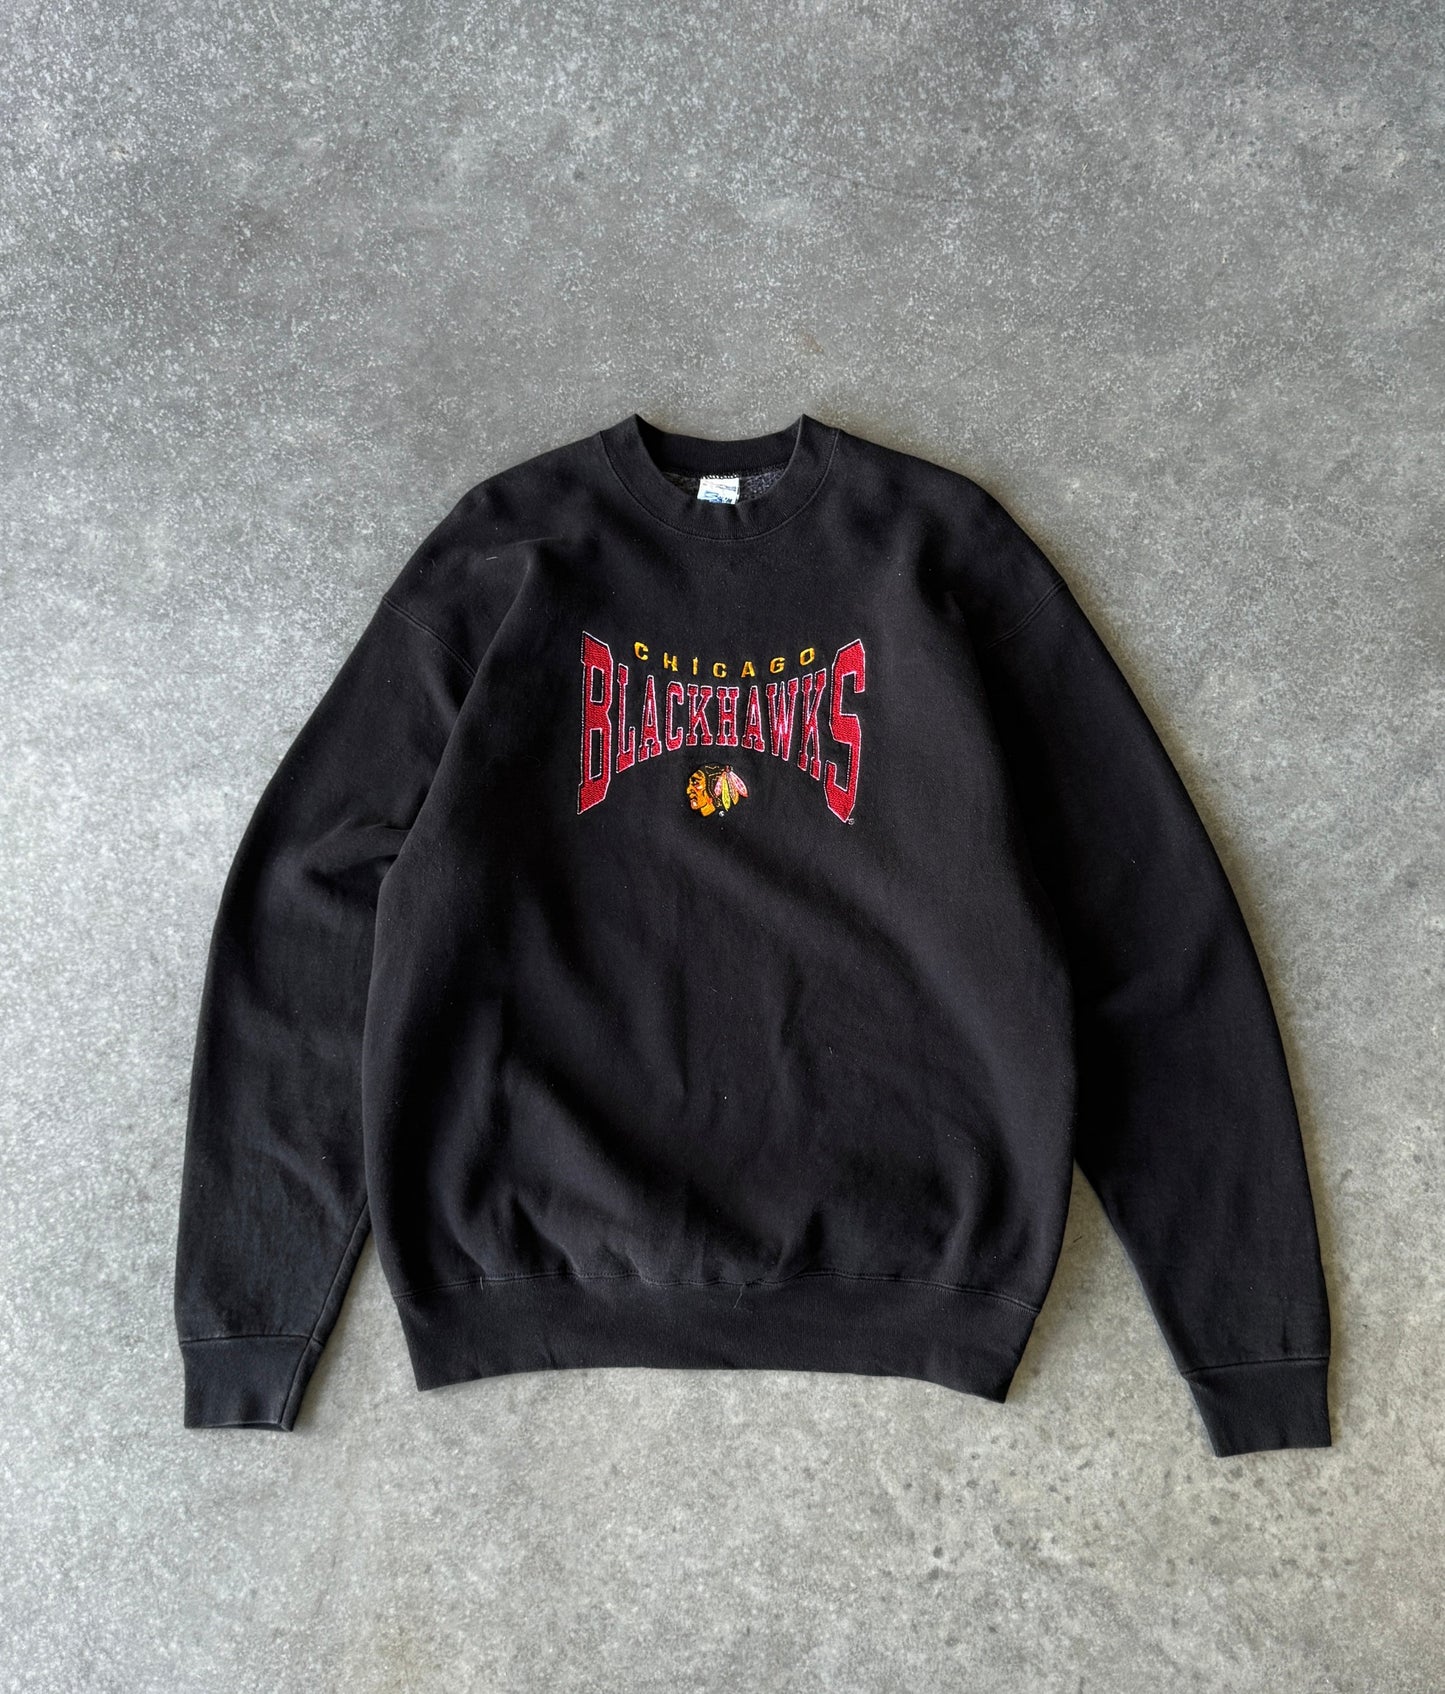 Vintage Chicago Blackhawks Embroidered Sweater (XL)